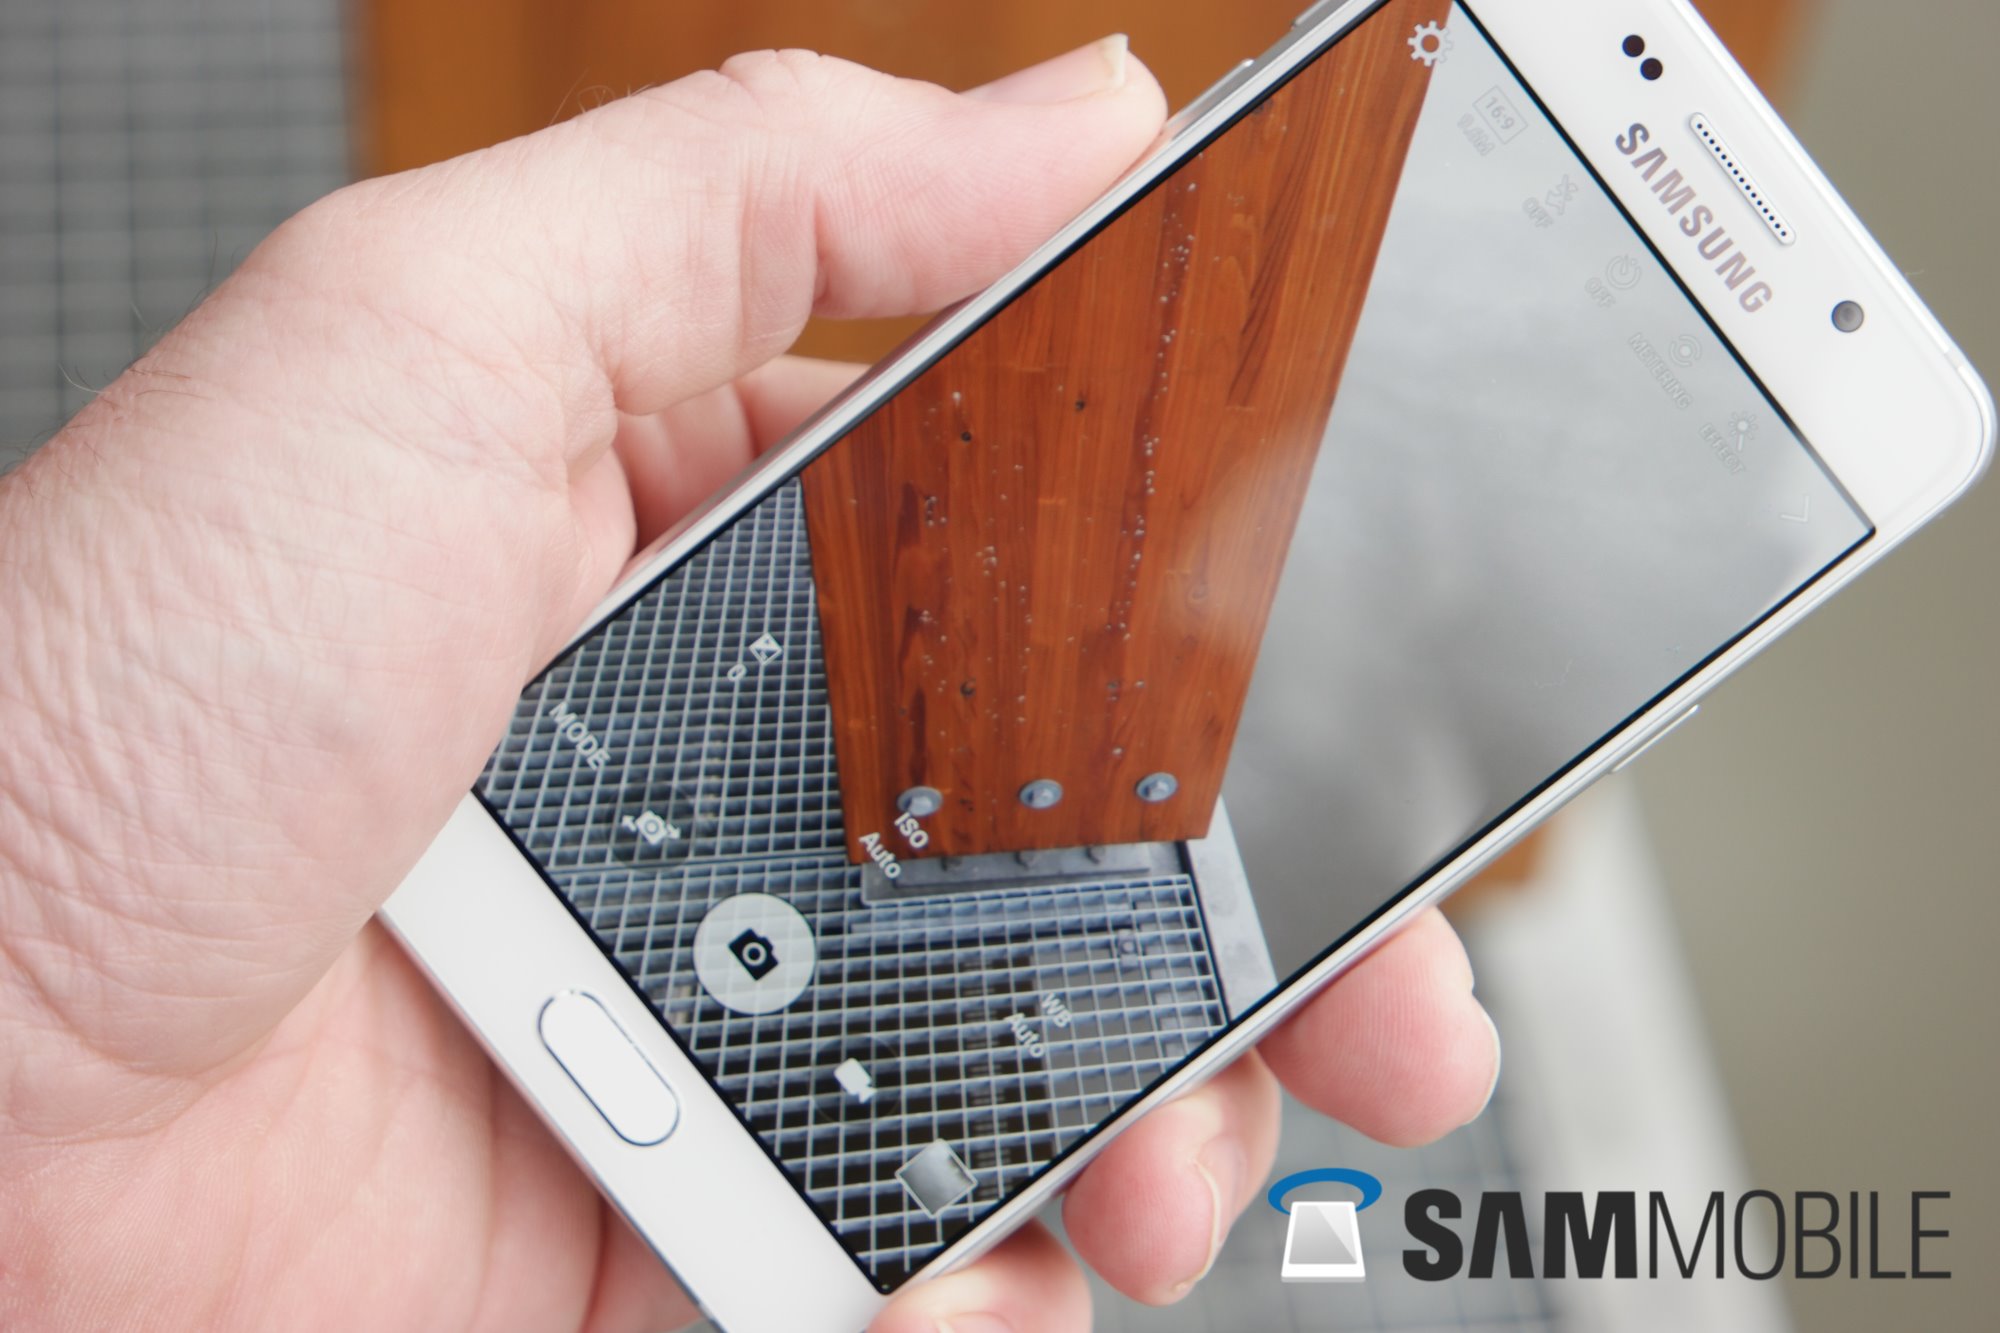 Templado estaño blanco Samsung Galaxy A3 (2016) review: basic, beautiful, and a bit too expensive  - SamMobile - SamMobile